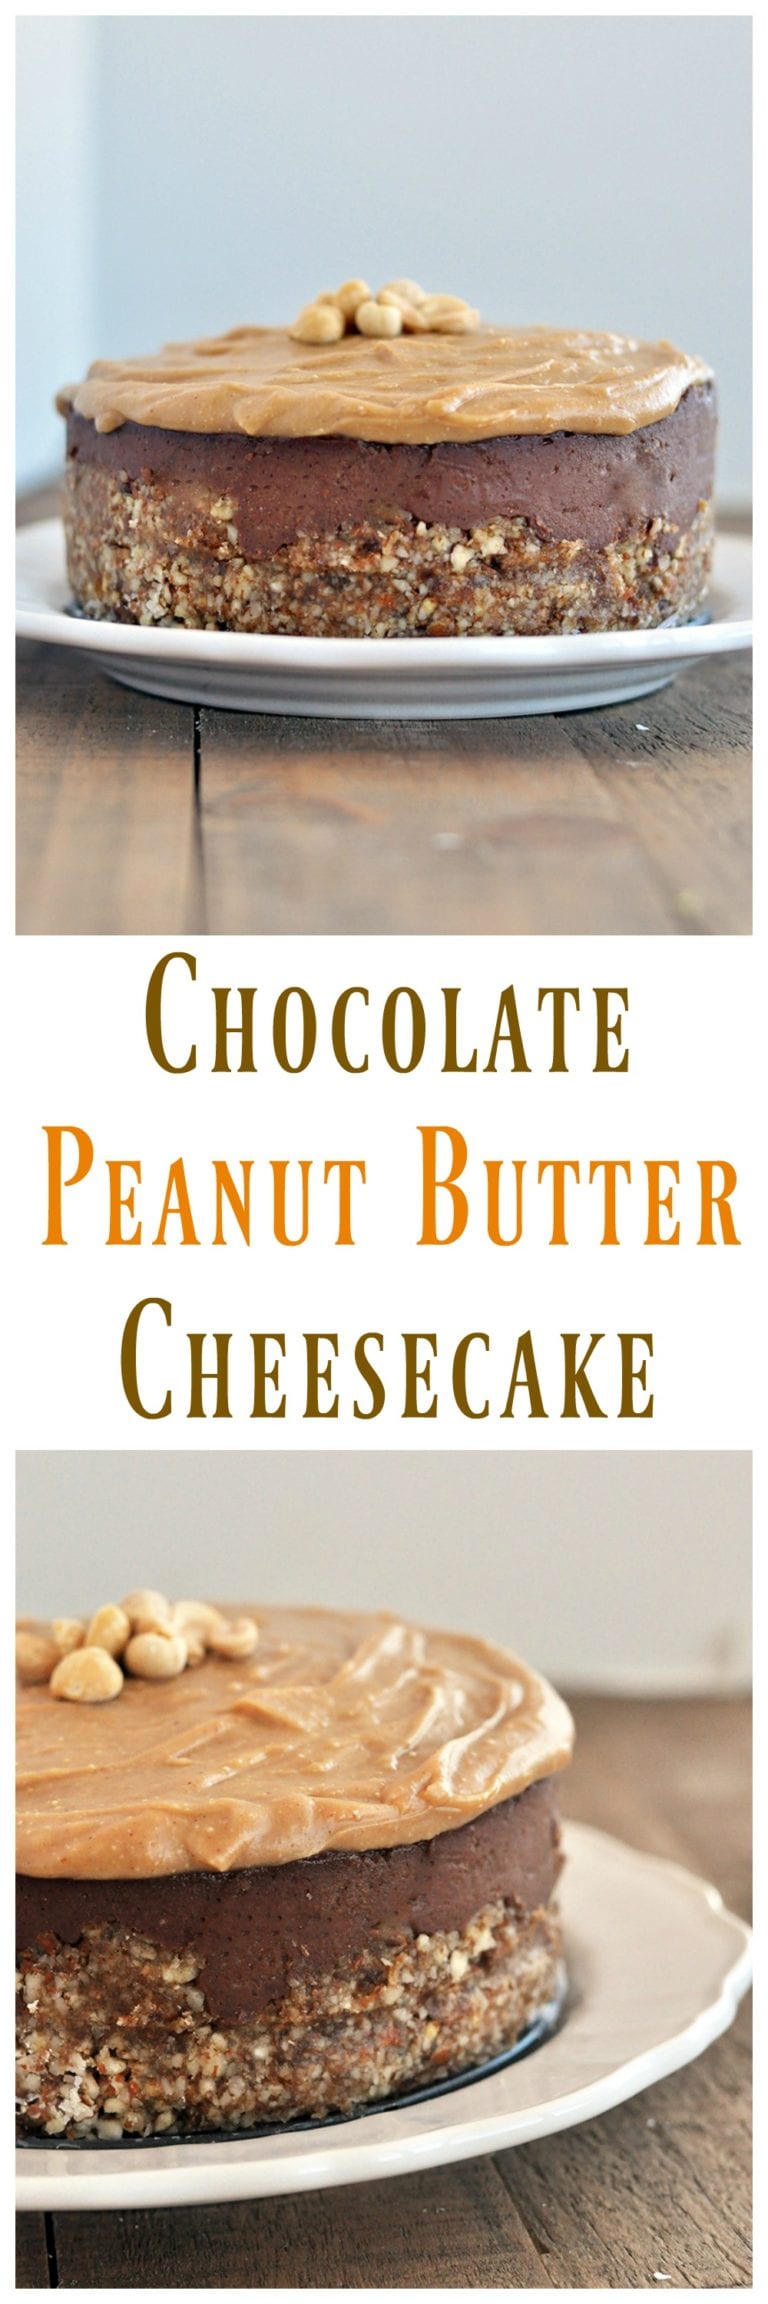 Chocolate Peanut Butter Cheesecake (Vegan) - My Whole Food Life